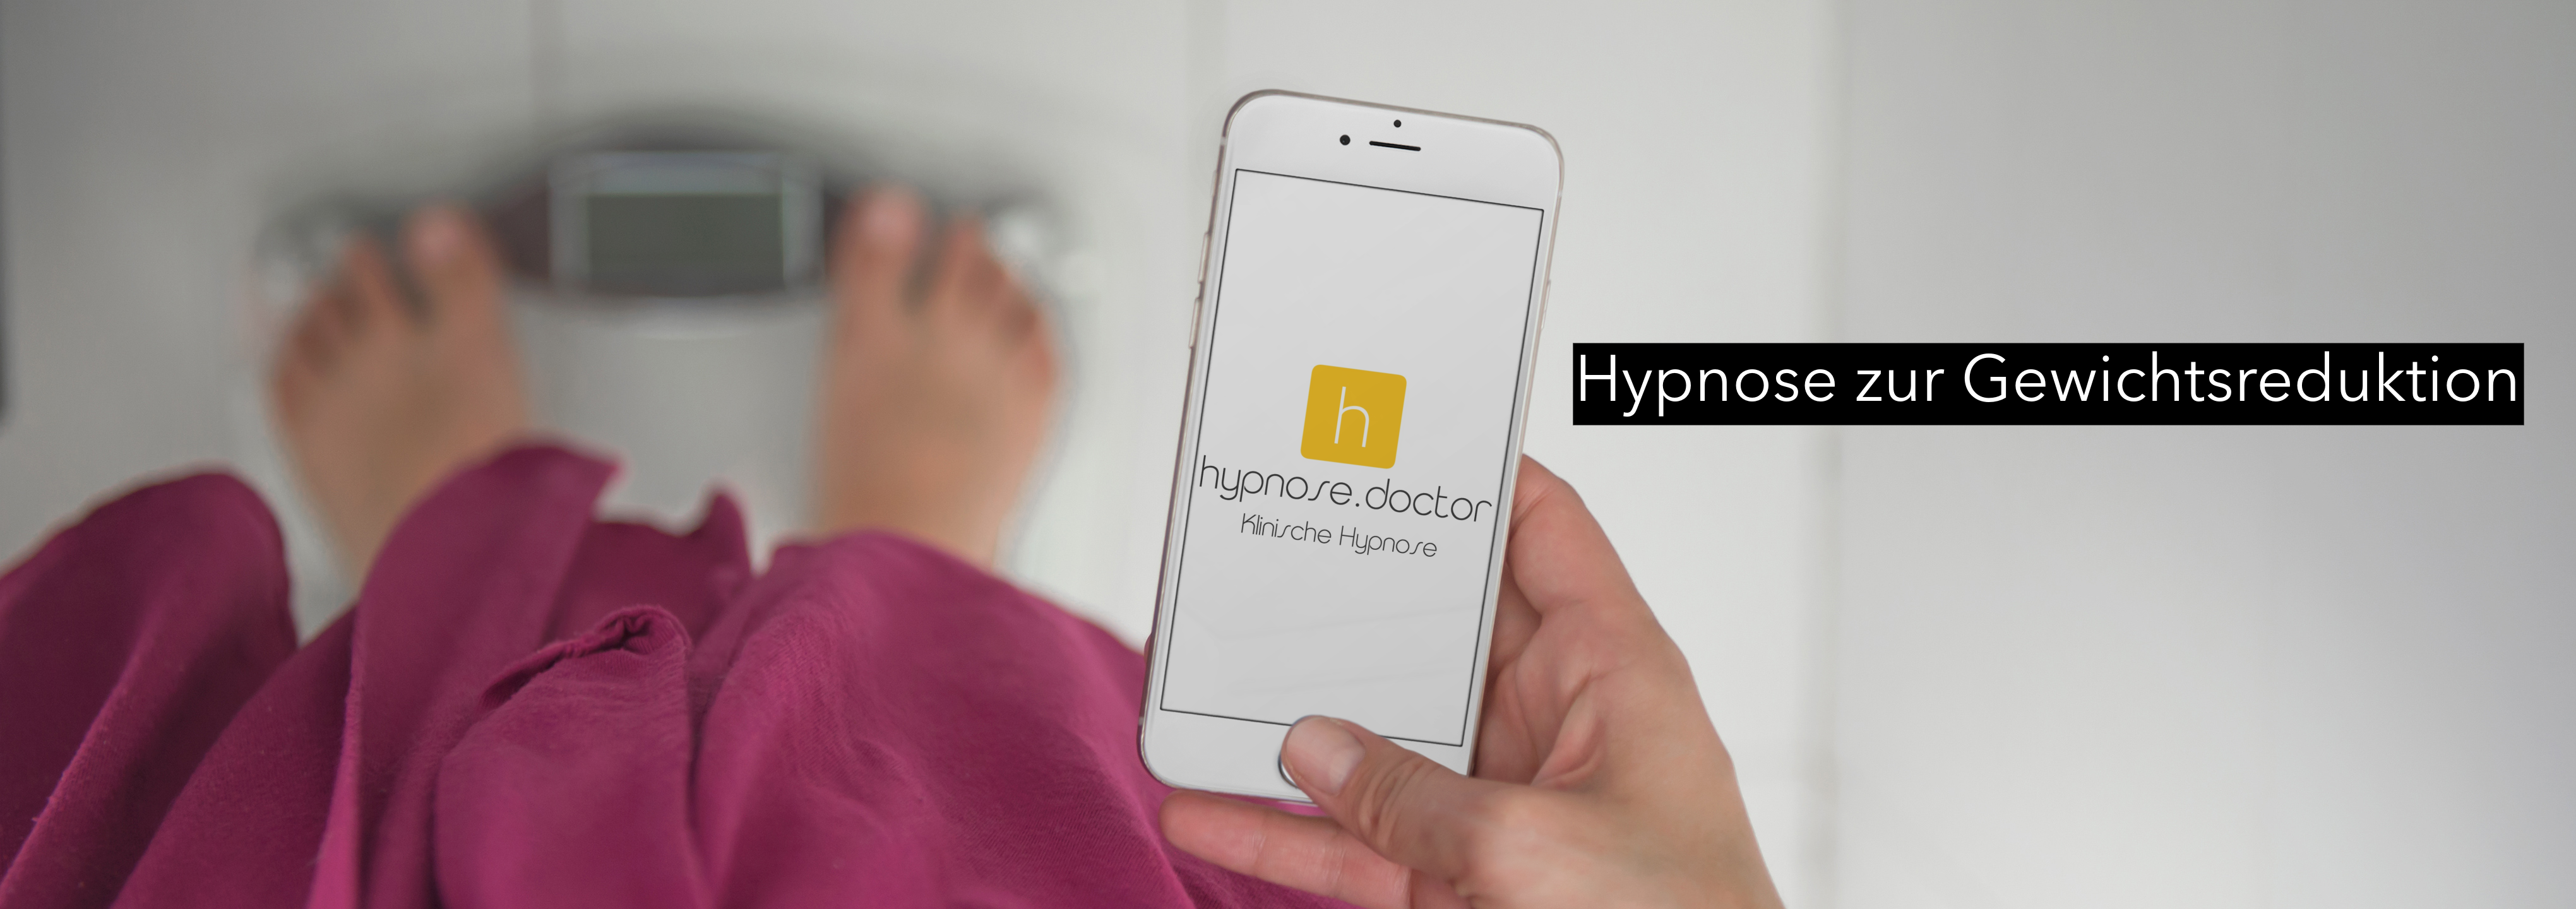 Hypnose zur Gewichtsreduktion 5 - Hypnose Bamberg - Hypnosetherapie Bamberg